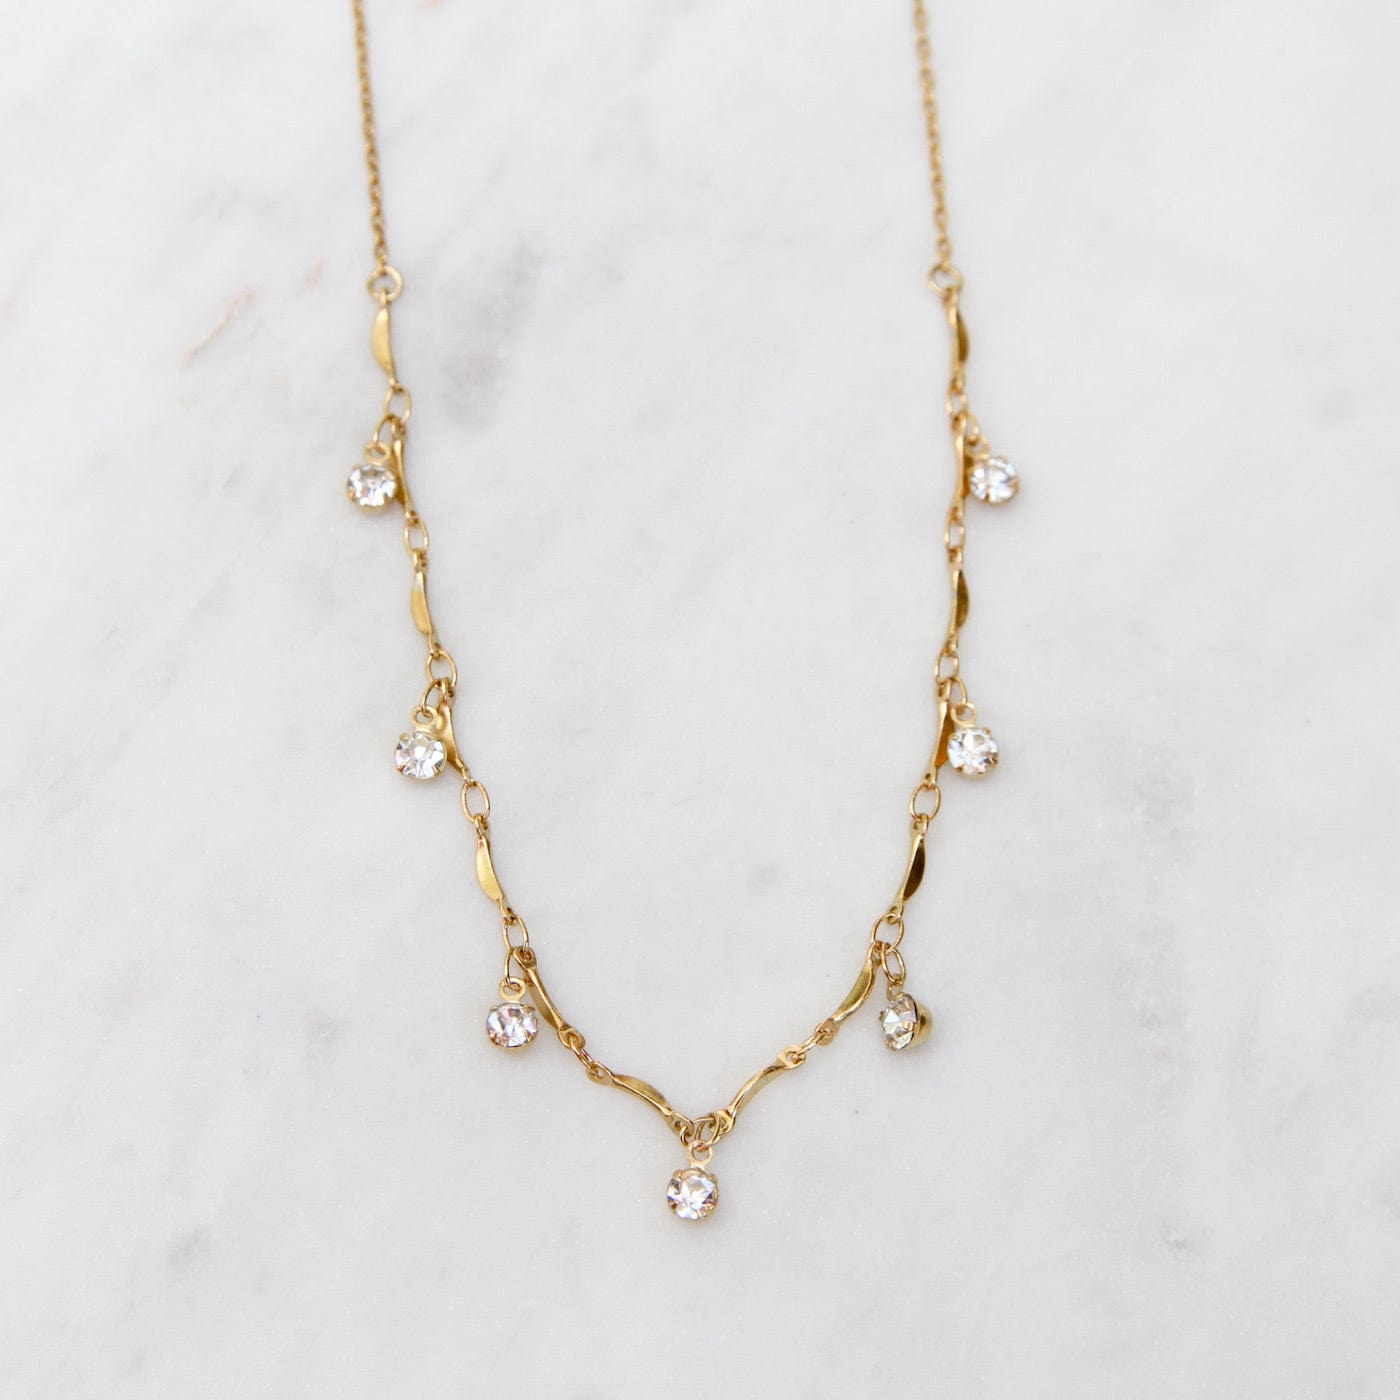 NKL-JM Delicate Crystal Scalloped Necklace - Gold Plate